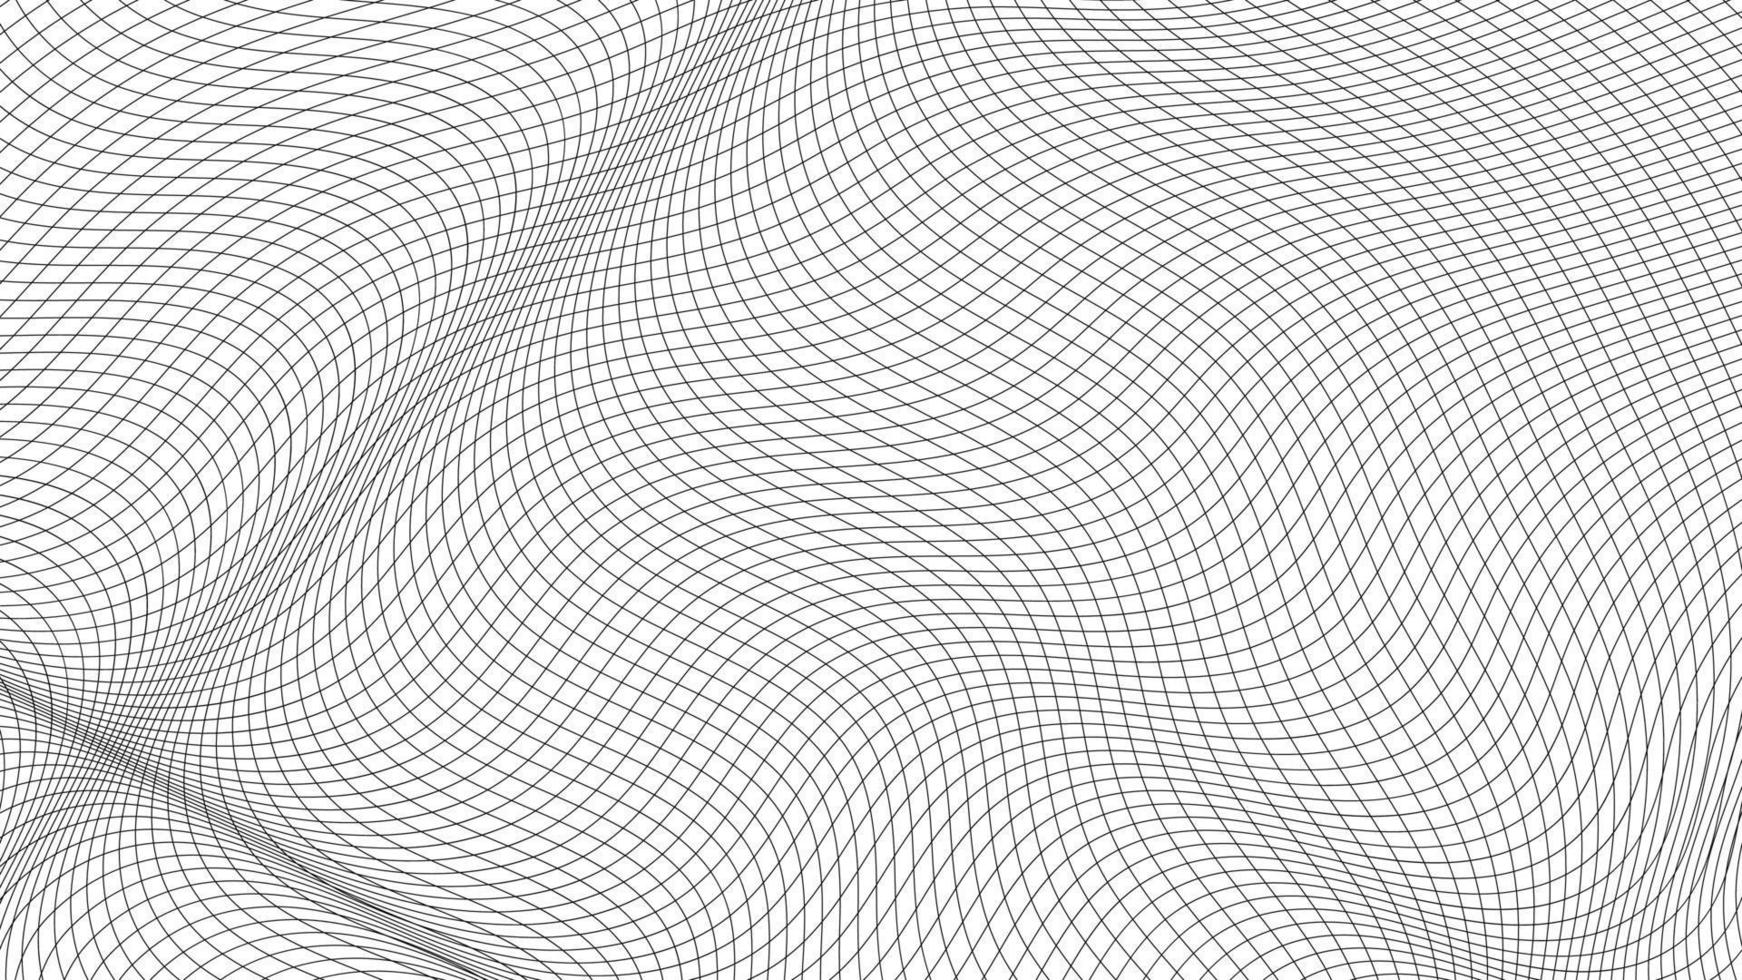 Gitter wellig Linien Muster, Gittergewebe Platz Matrix, strecken Dichte Textur vektor